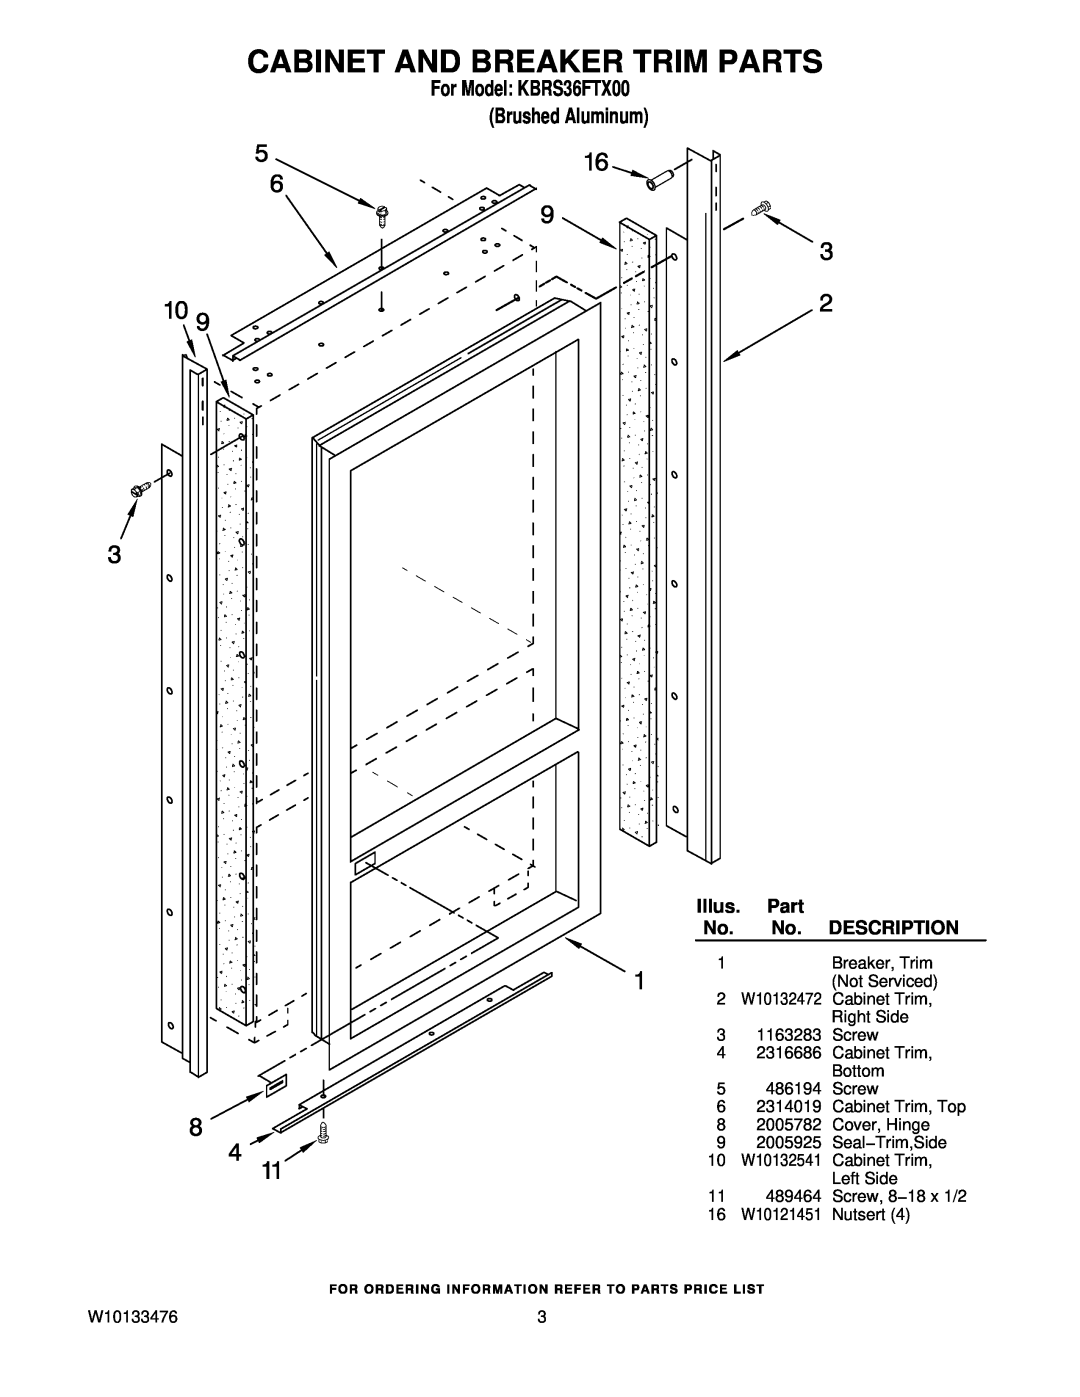 KitchenAid manual Cabinet And Breaker Trim Parts, For Model KBRS36FTX00 Brushed Aluminum, Illus, Description 